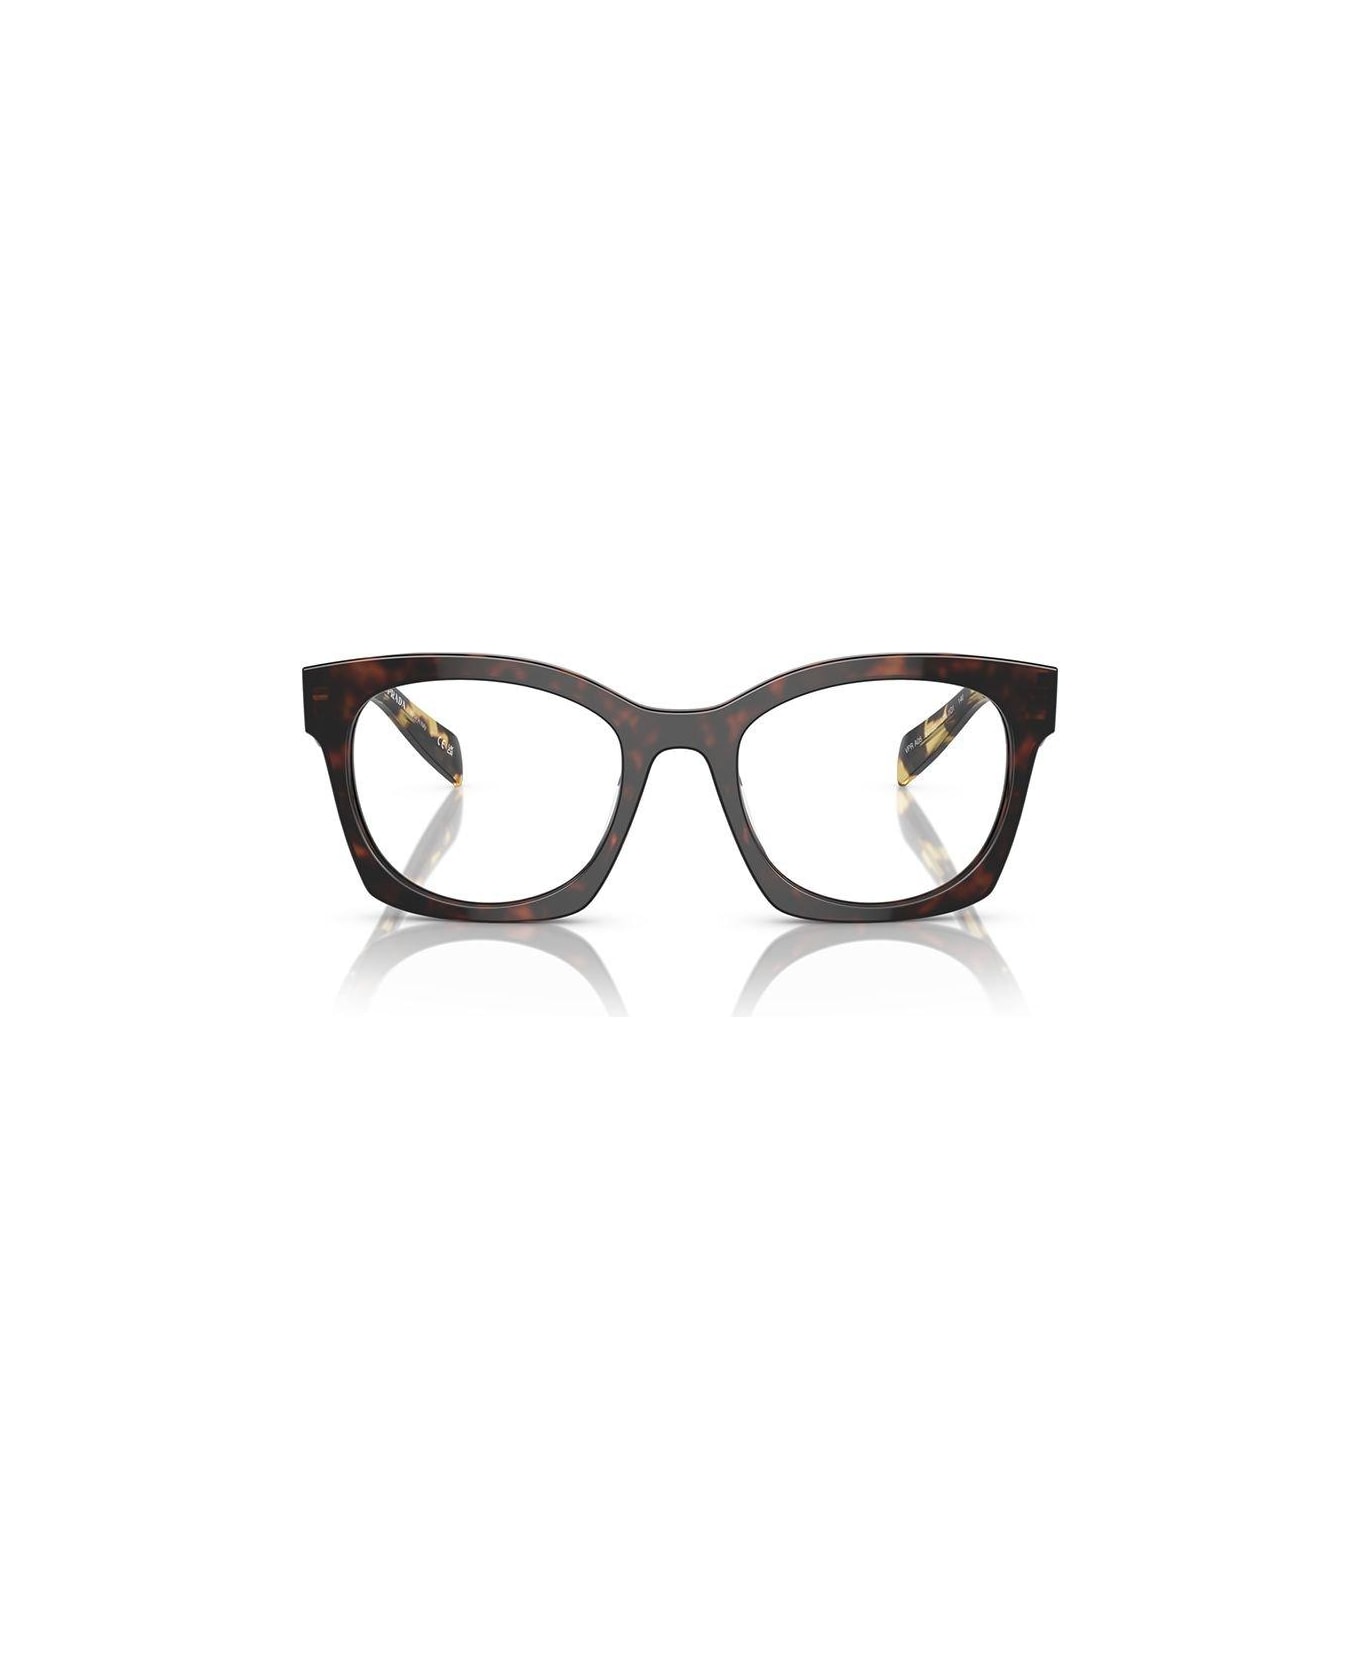 Prada Eyewear D-frame Glasses - 17N1O1 アイウェア